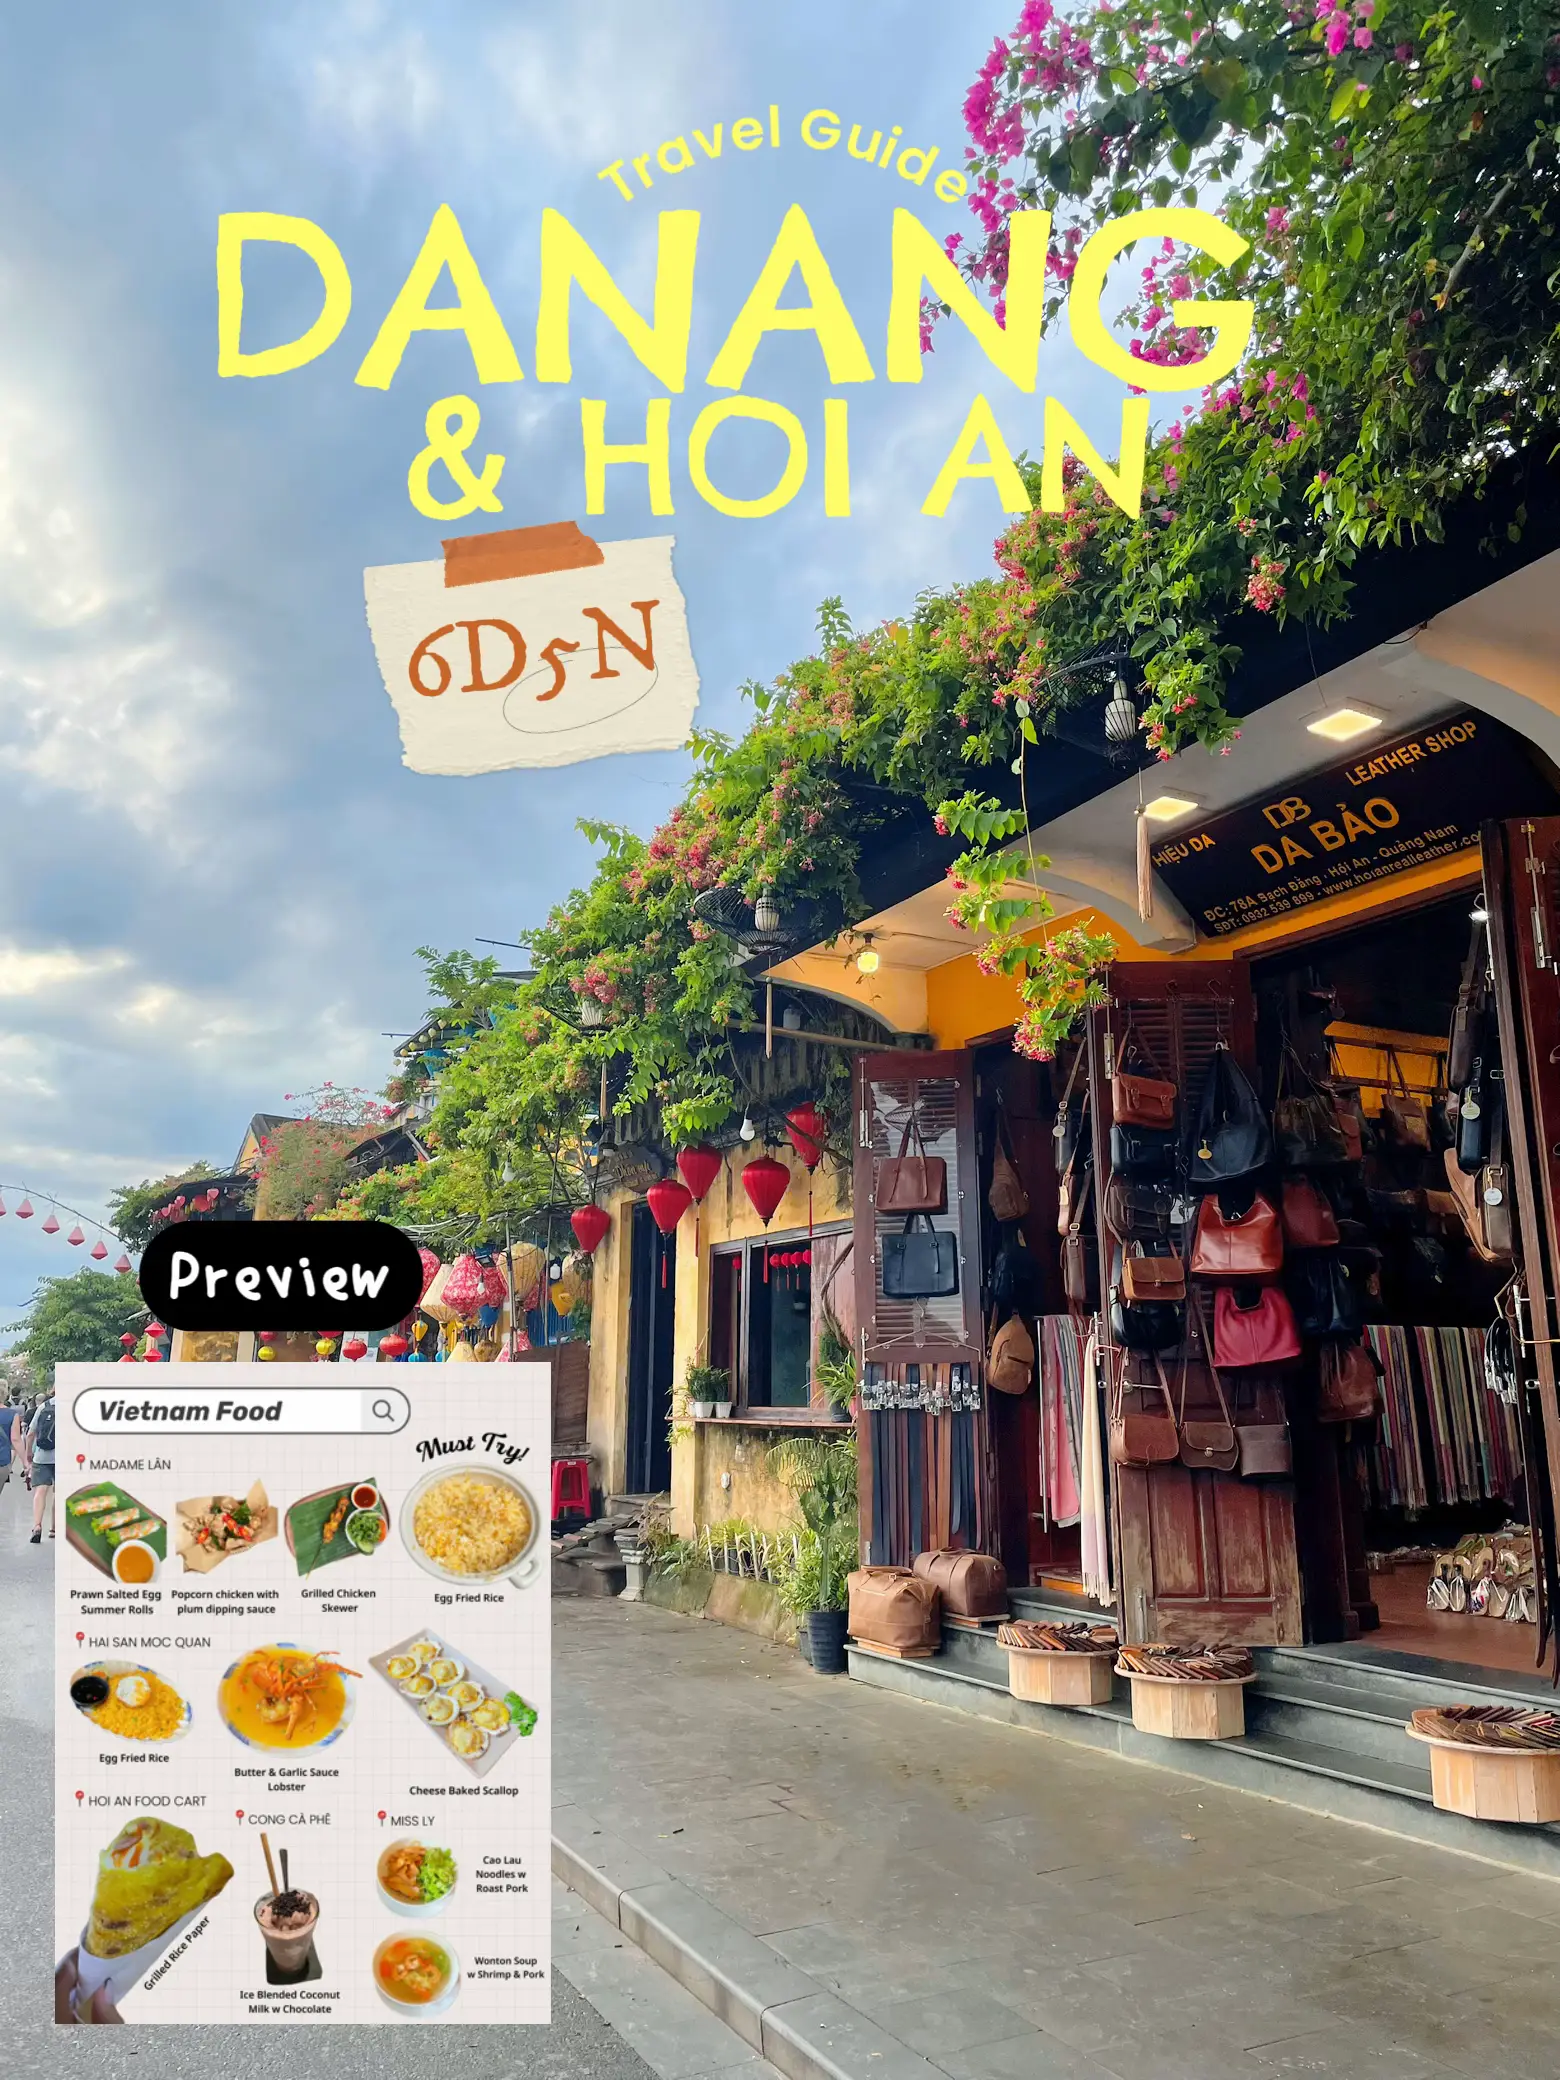 Ultimate travel guideㅣ Danang & Hoi An🇻🇳's images(0)